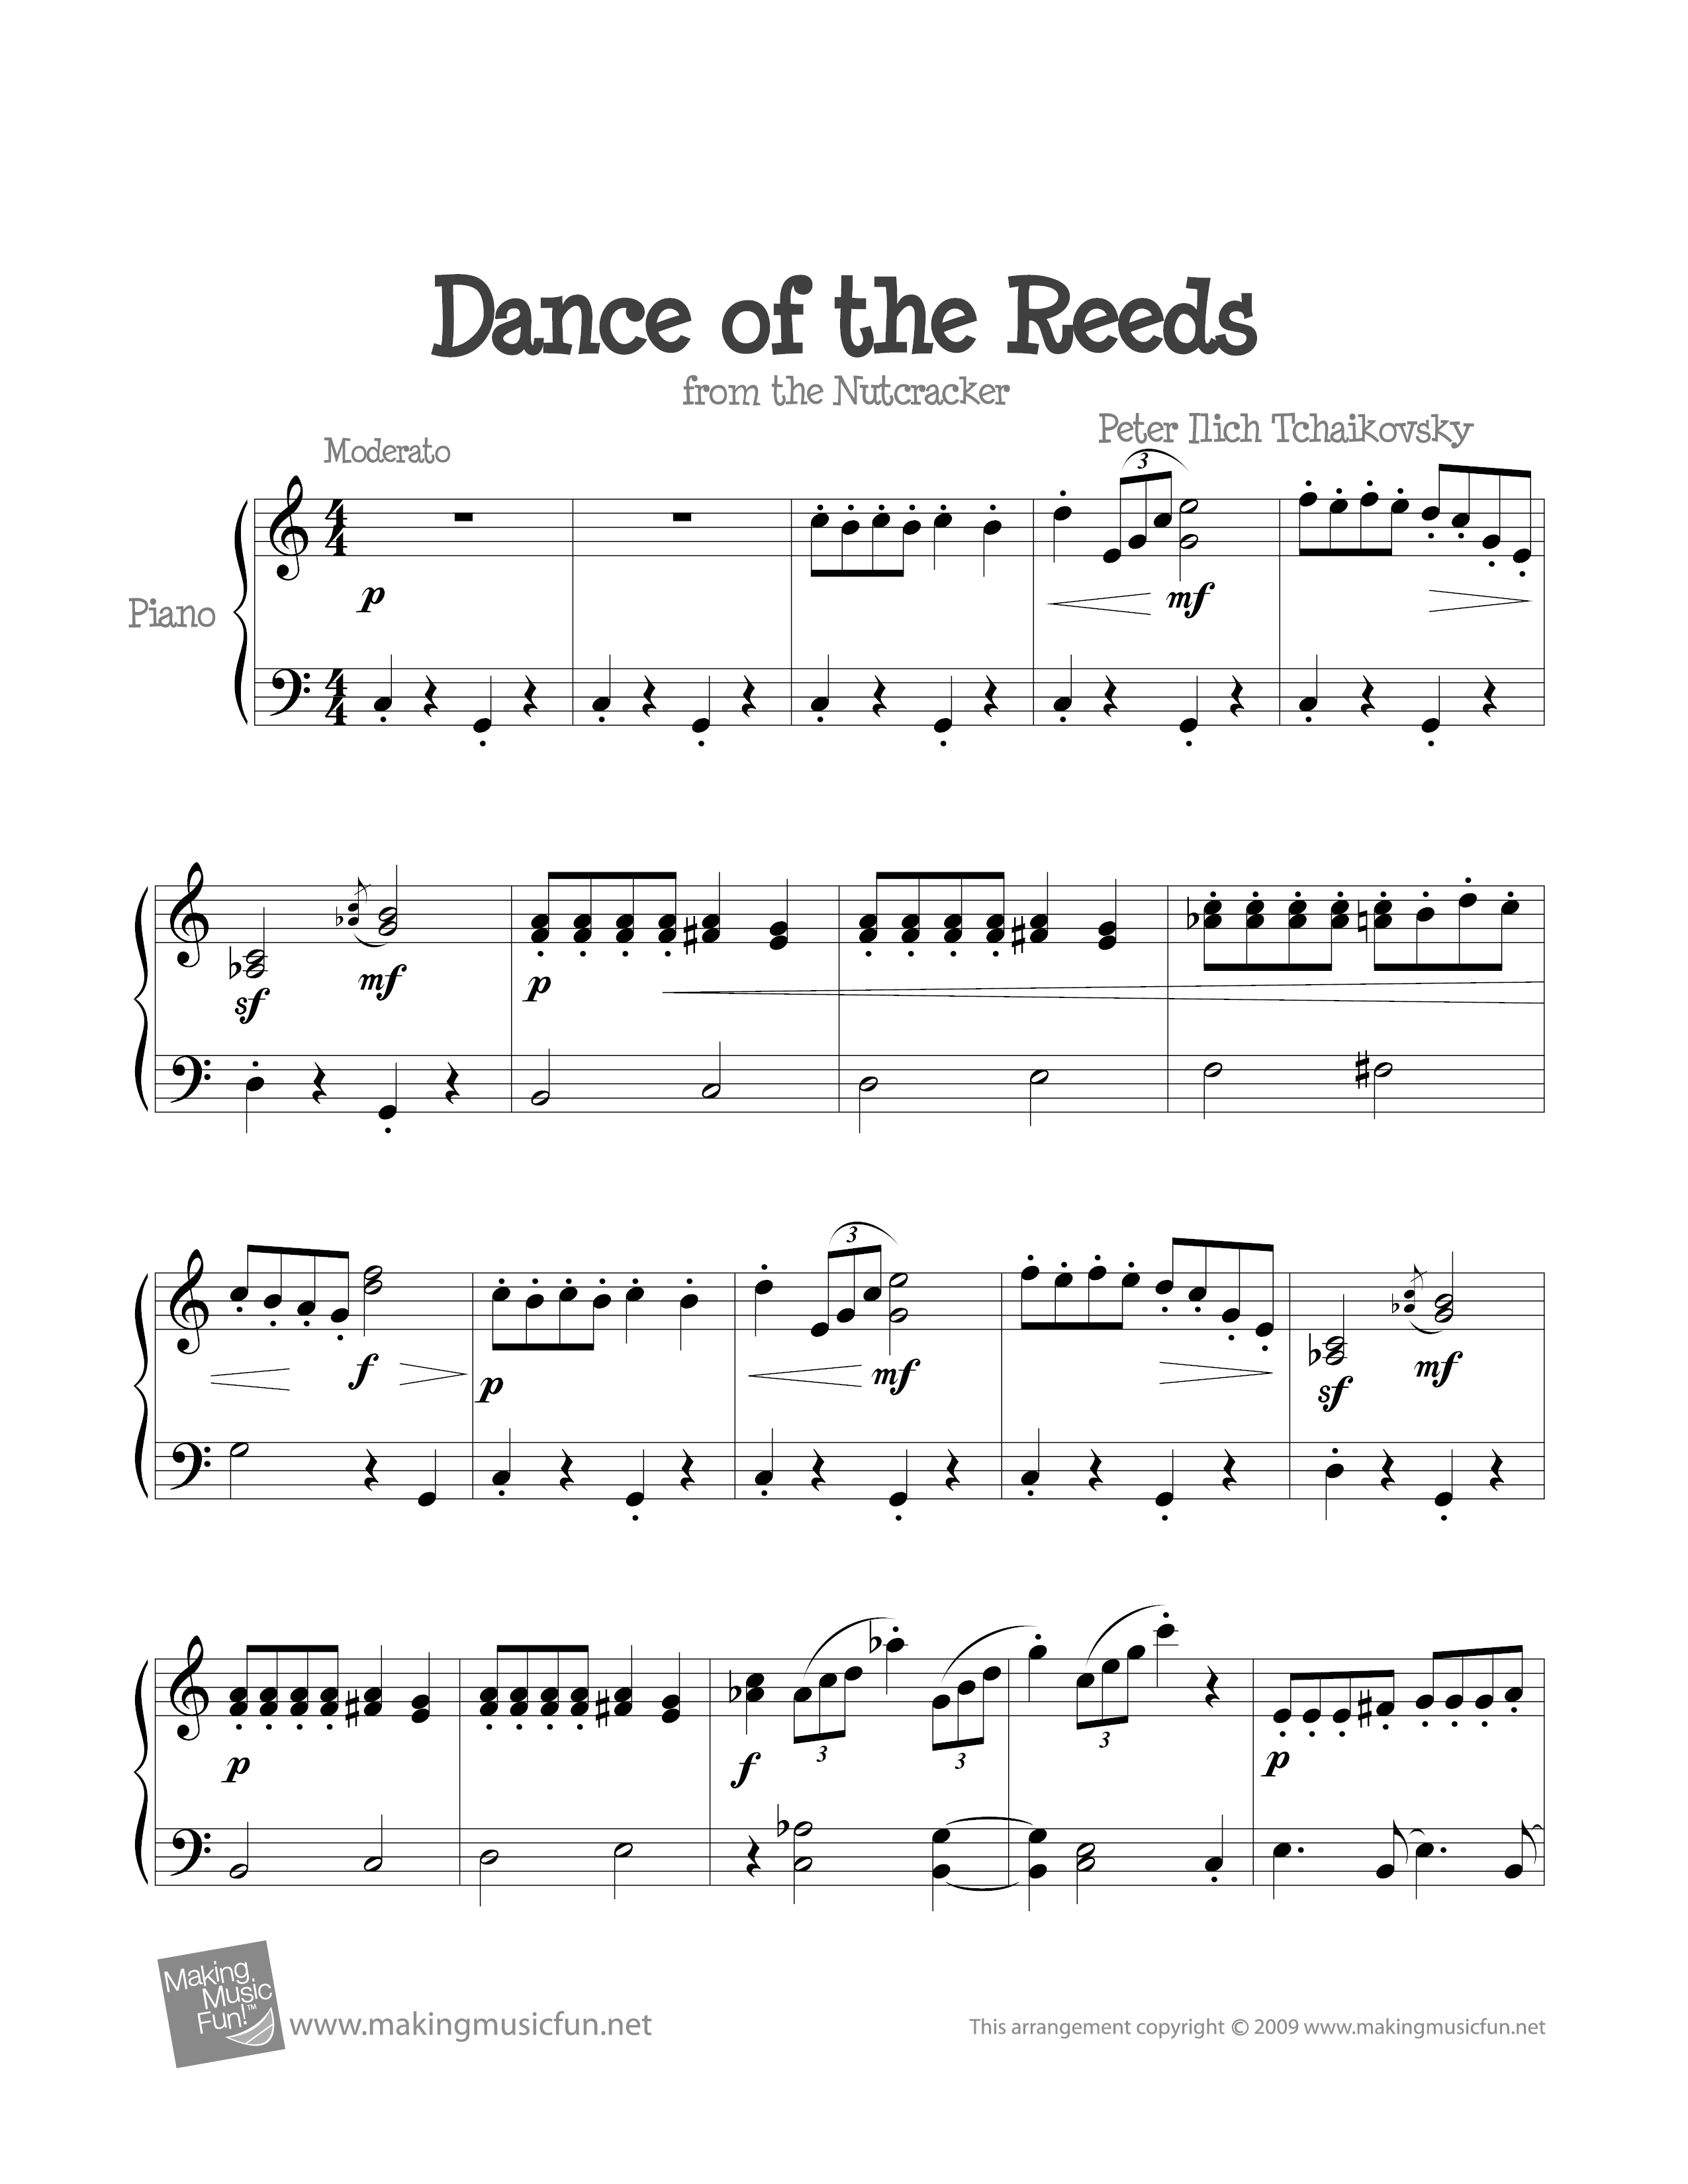 Dance of the Reeds (Nutcracker) Score